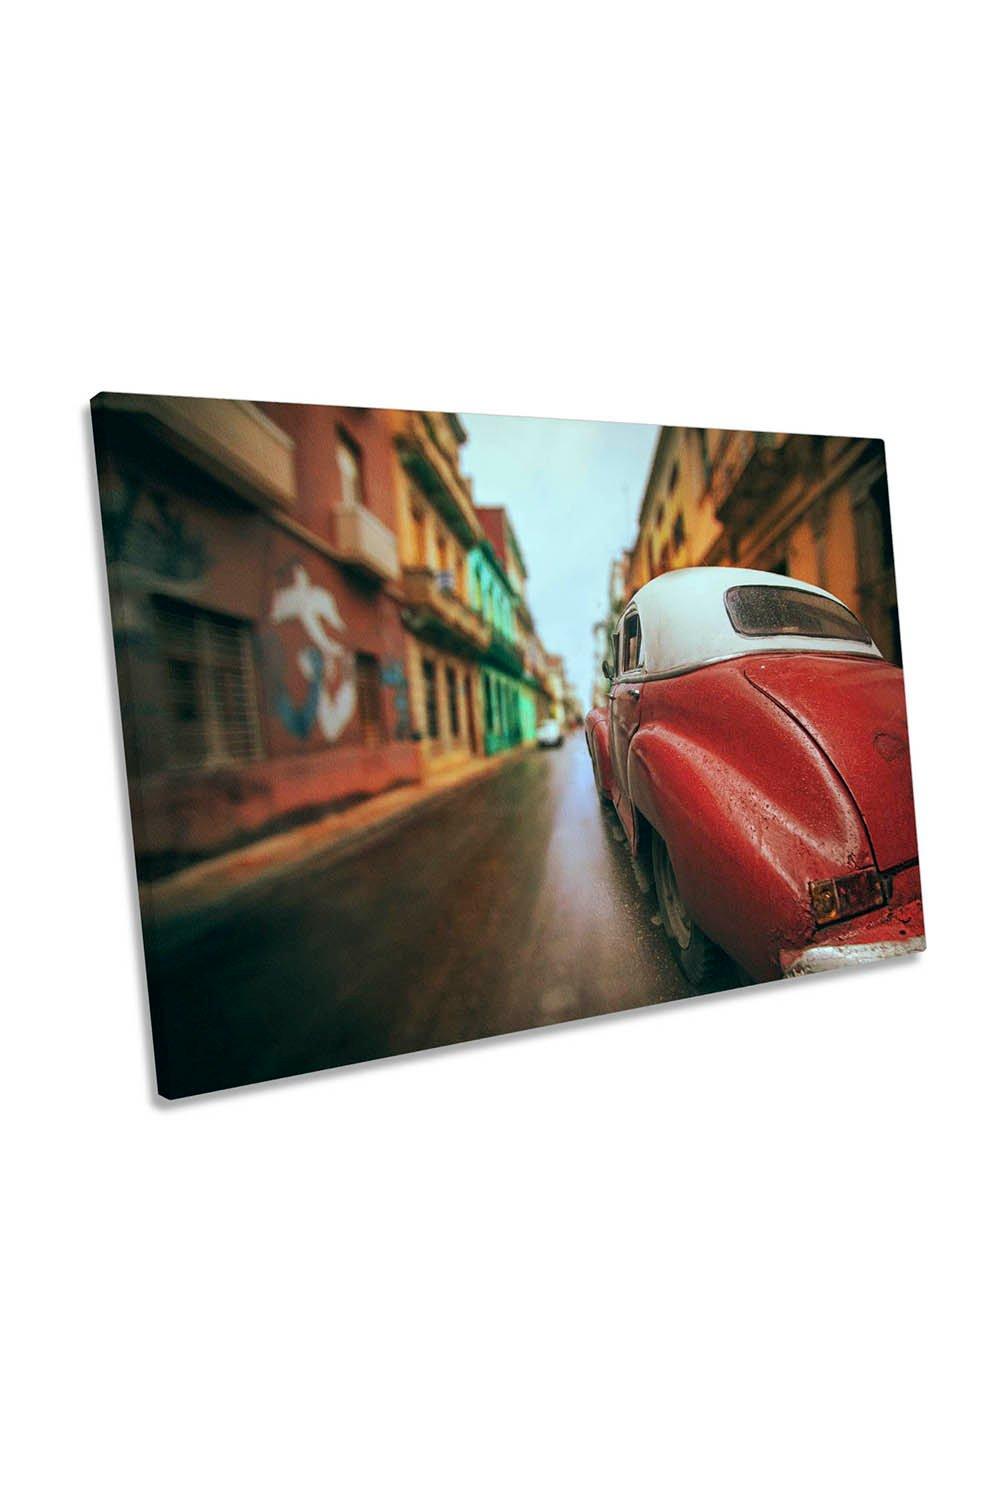 Red Cuba Classic Street Car Havana Canvas Wall Art Picture Print